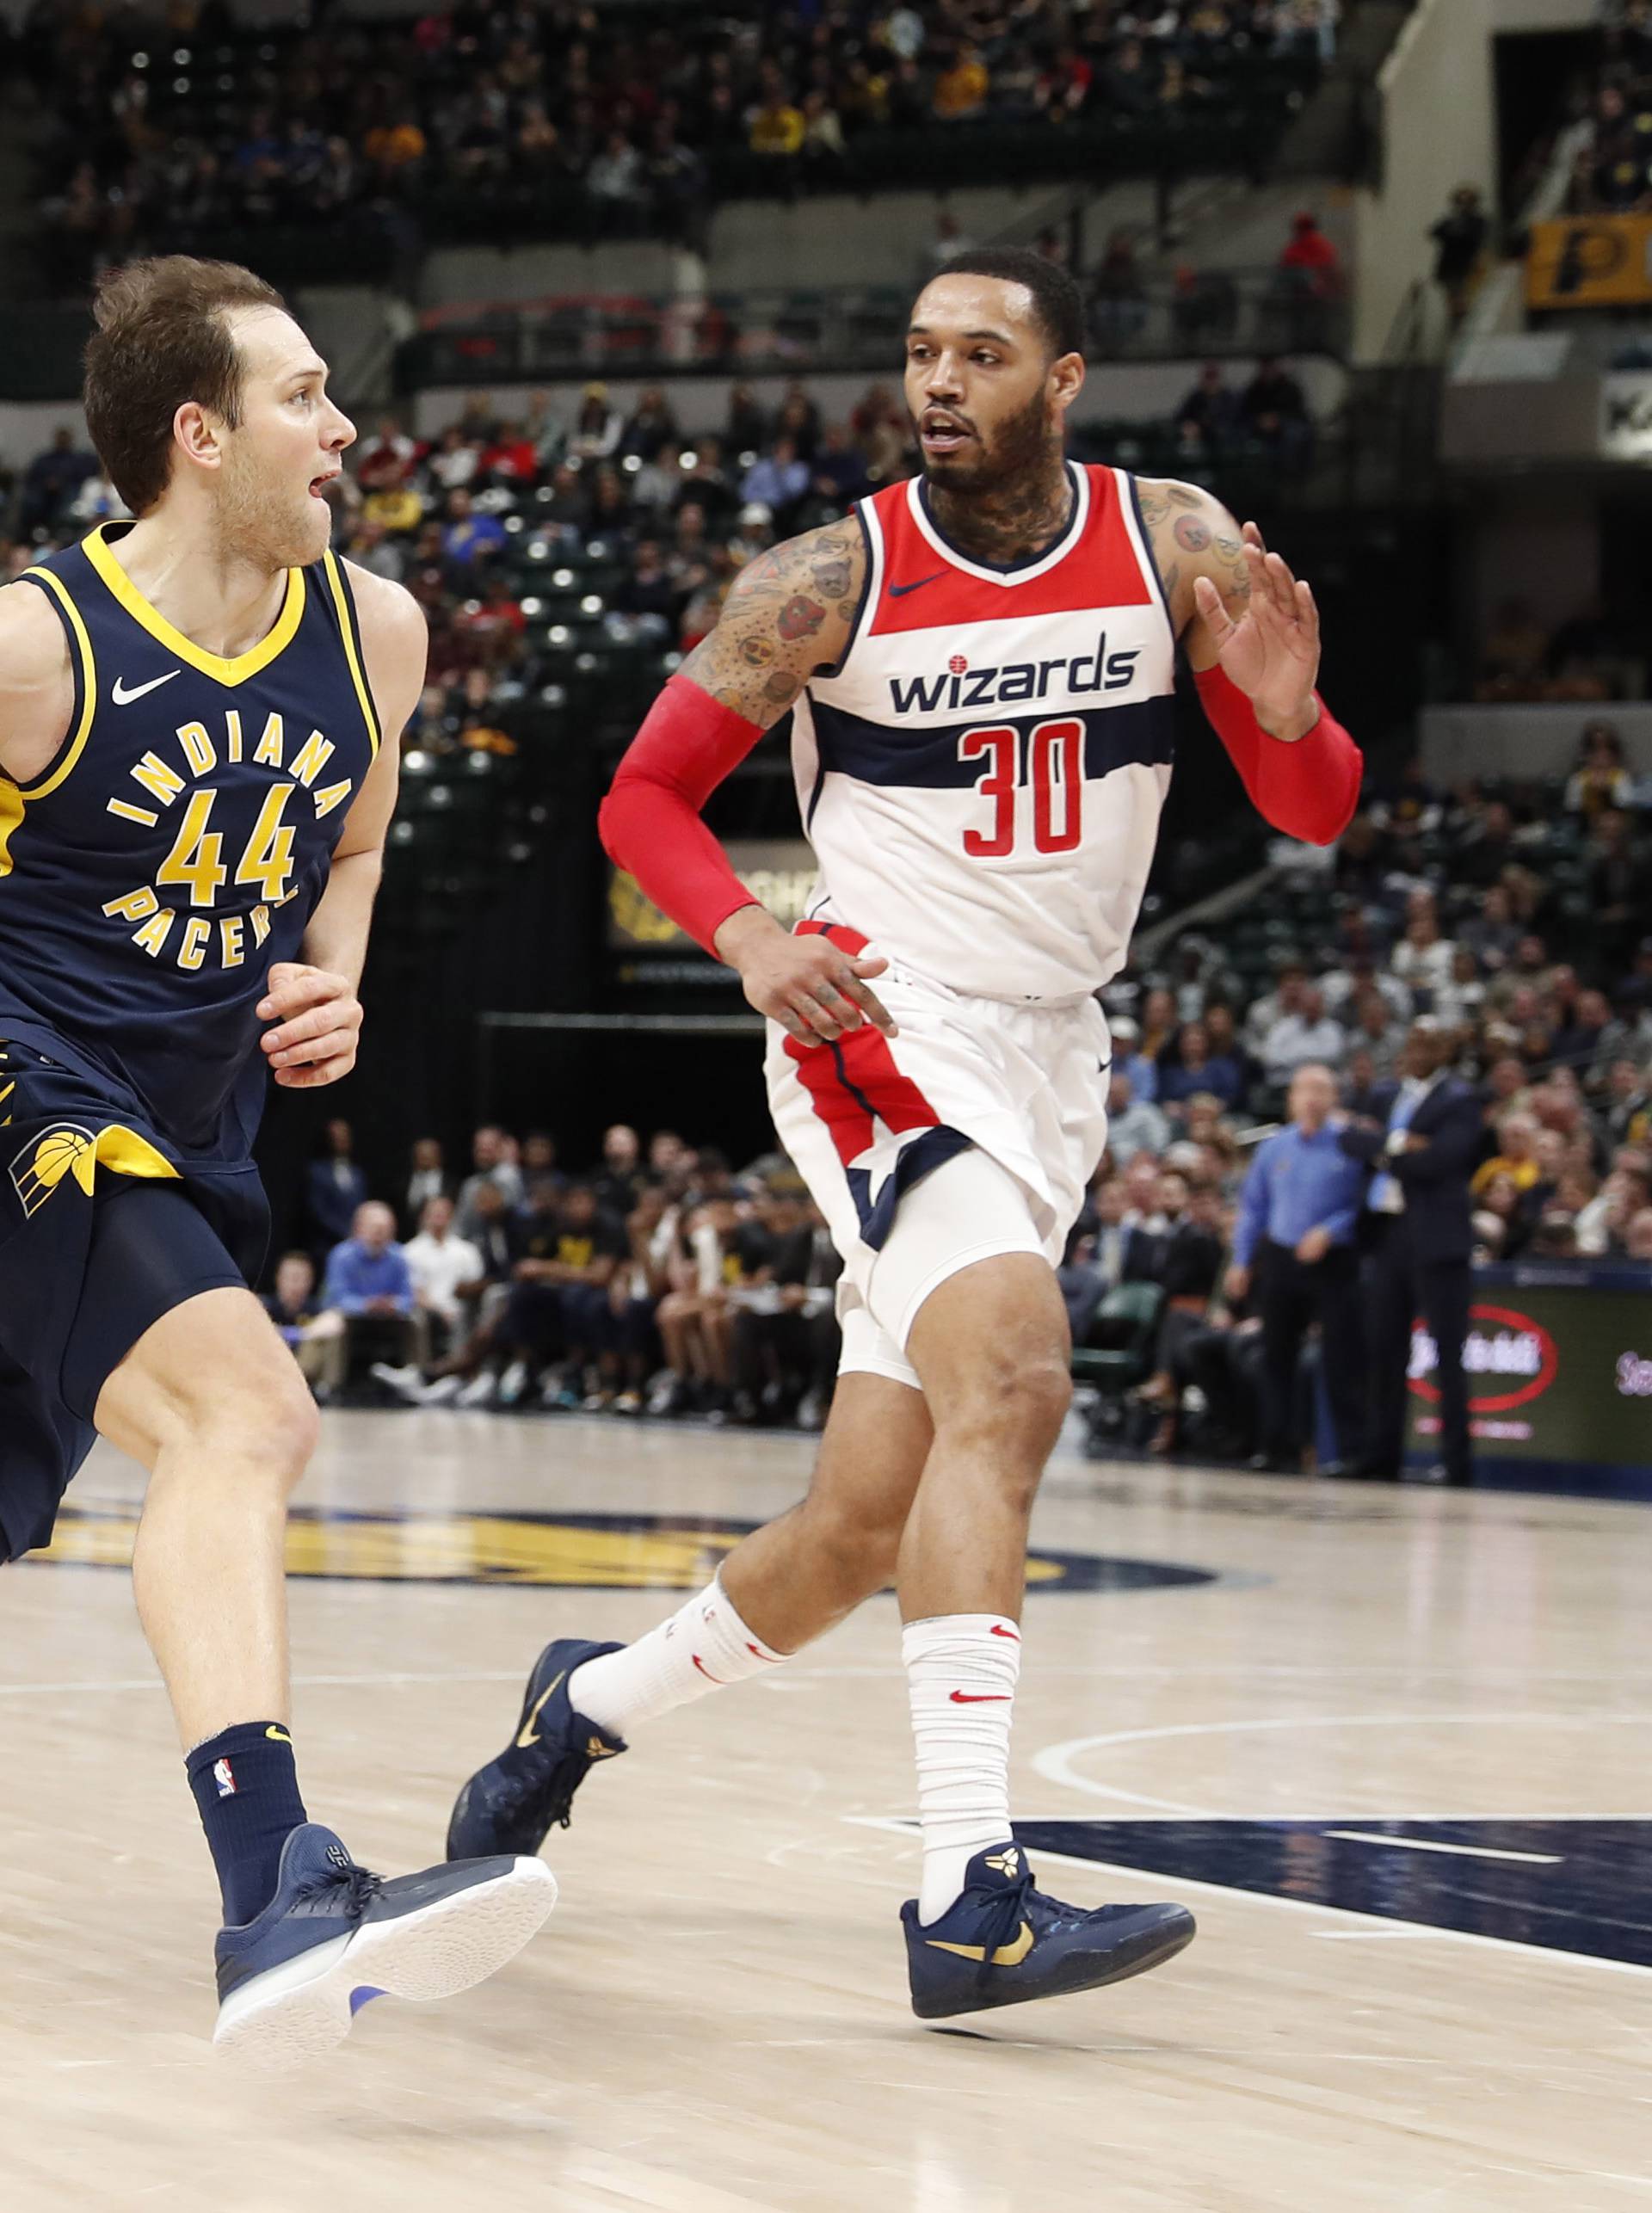 NBA: Washington Wizards at Indiana Pacers